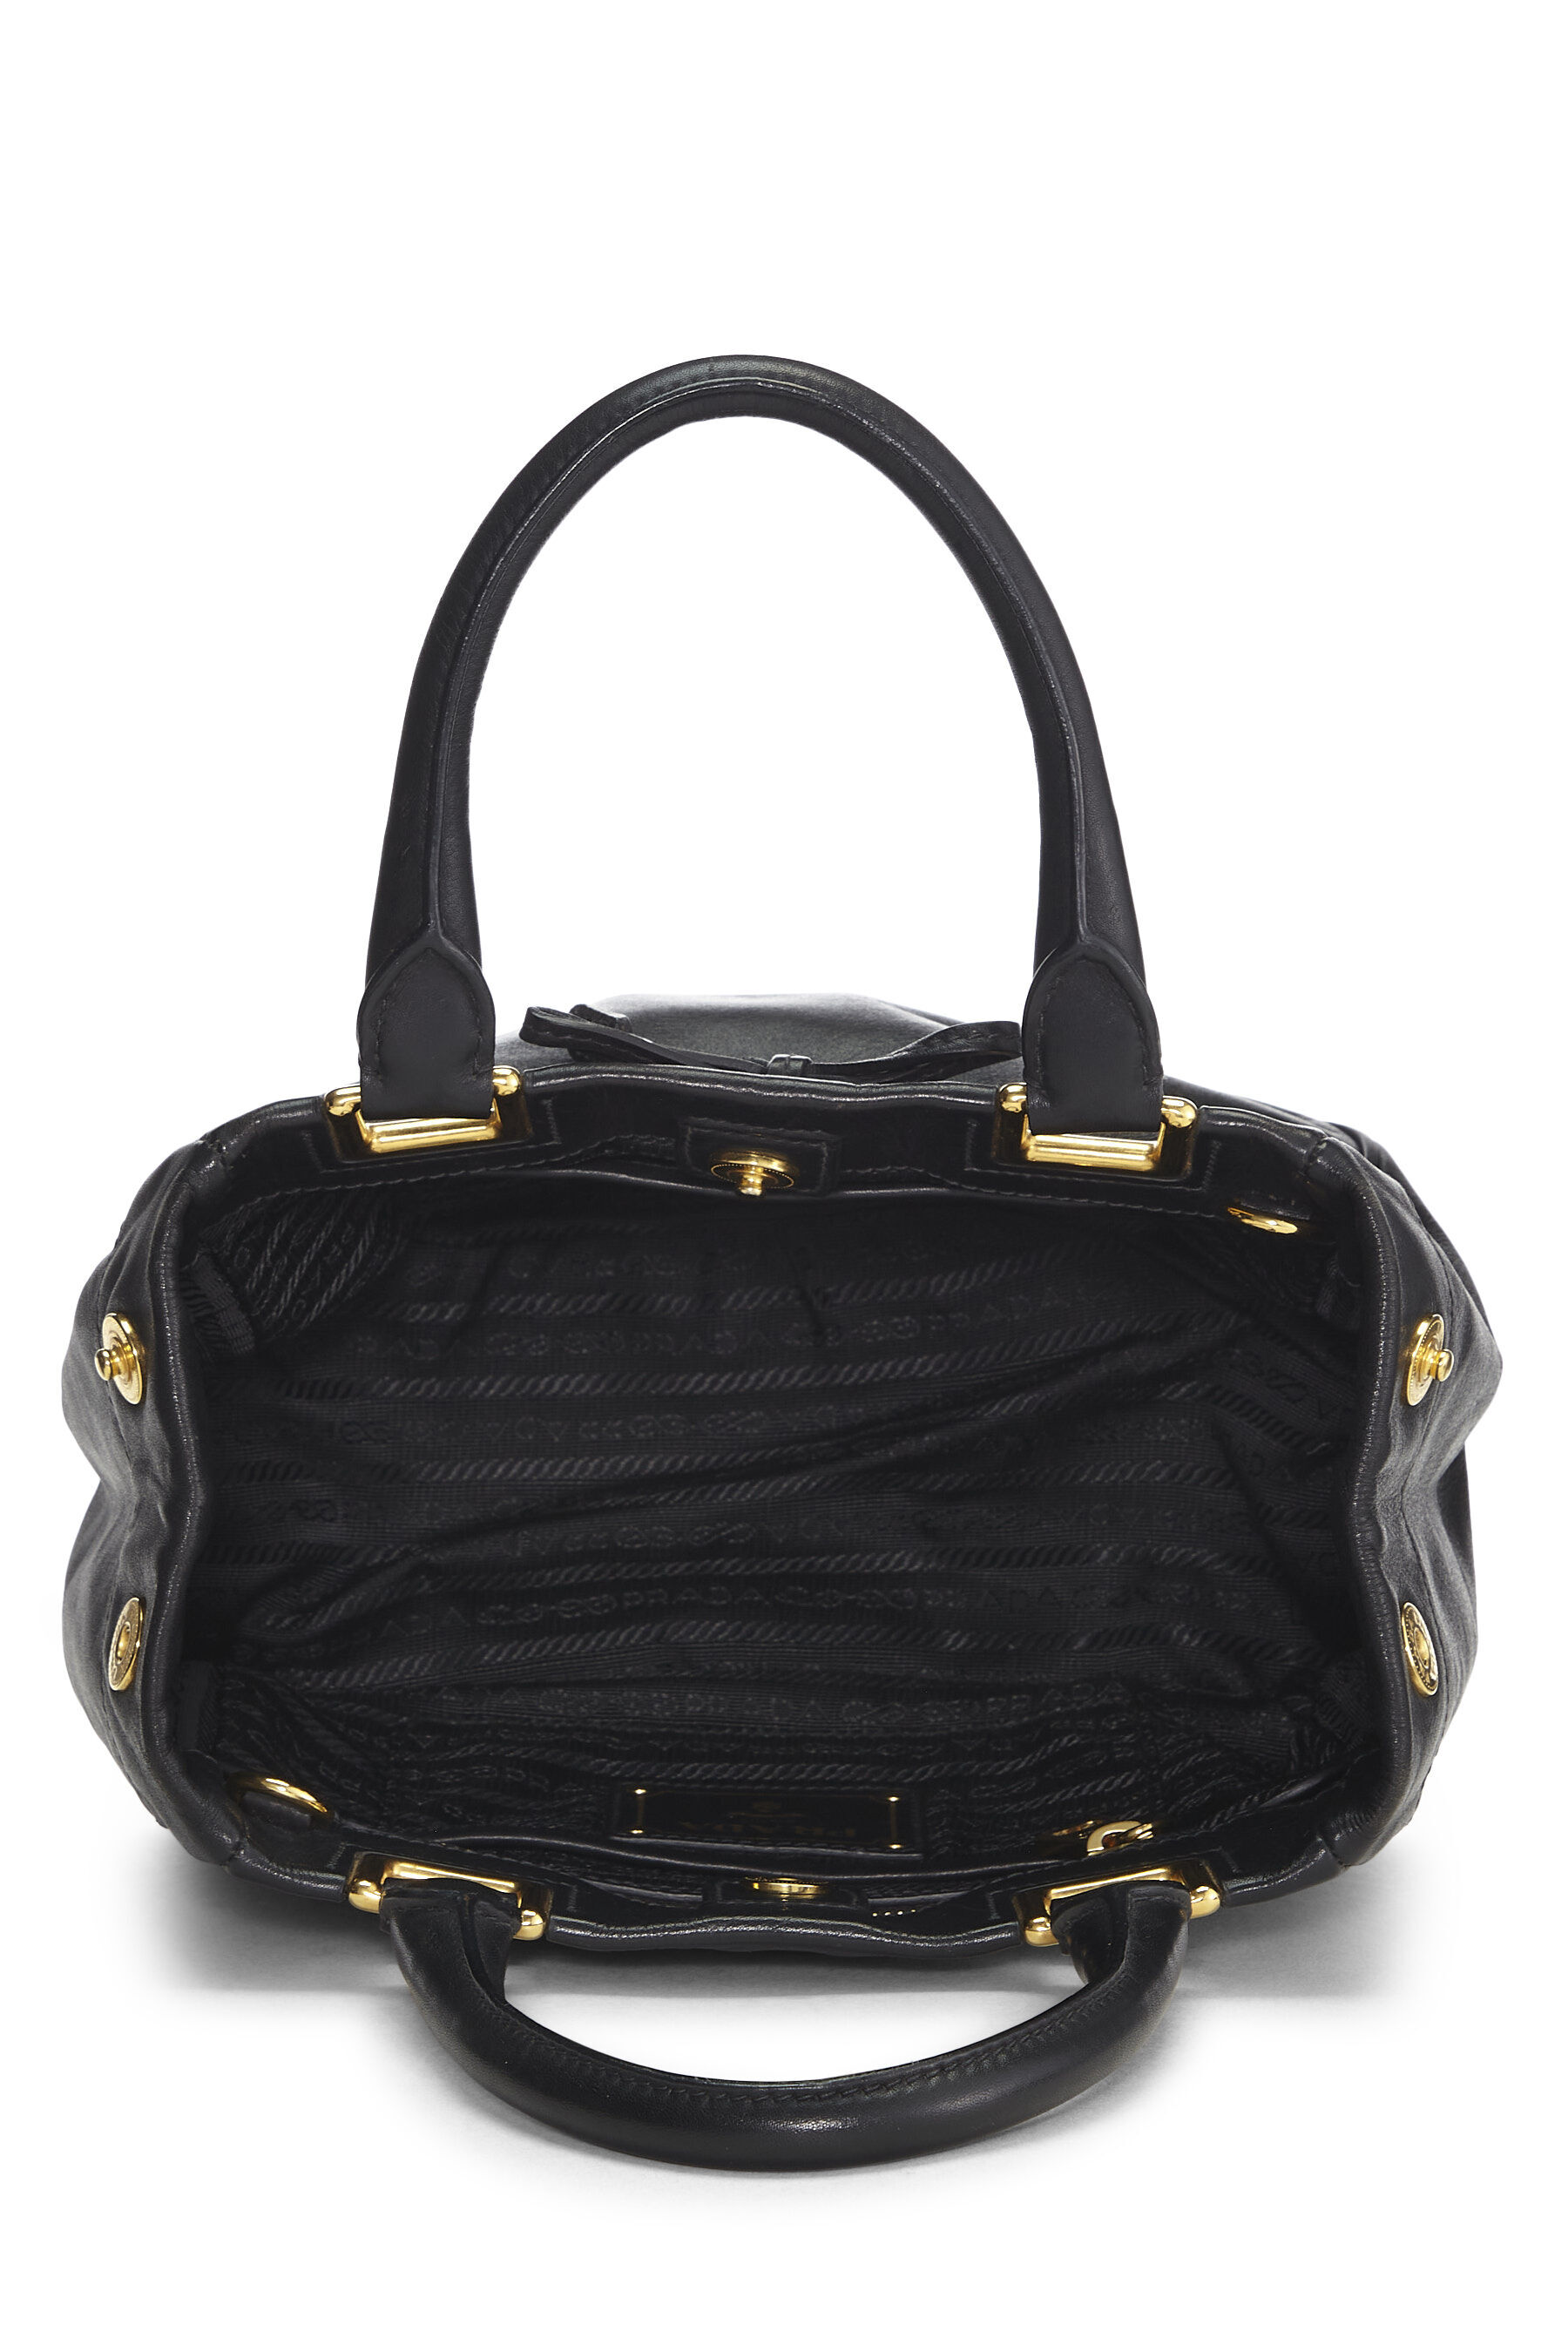 Prada Tessuto Nylon Black Leather Clochette Crossbody Tote Bag – Queen Bee  of Beverly Hills